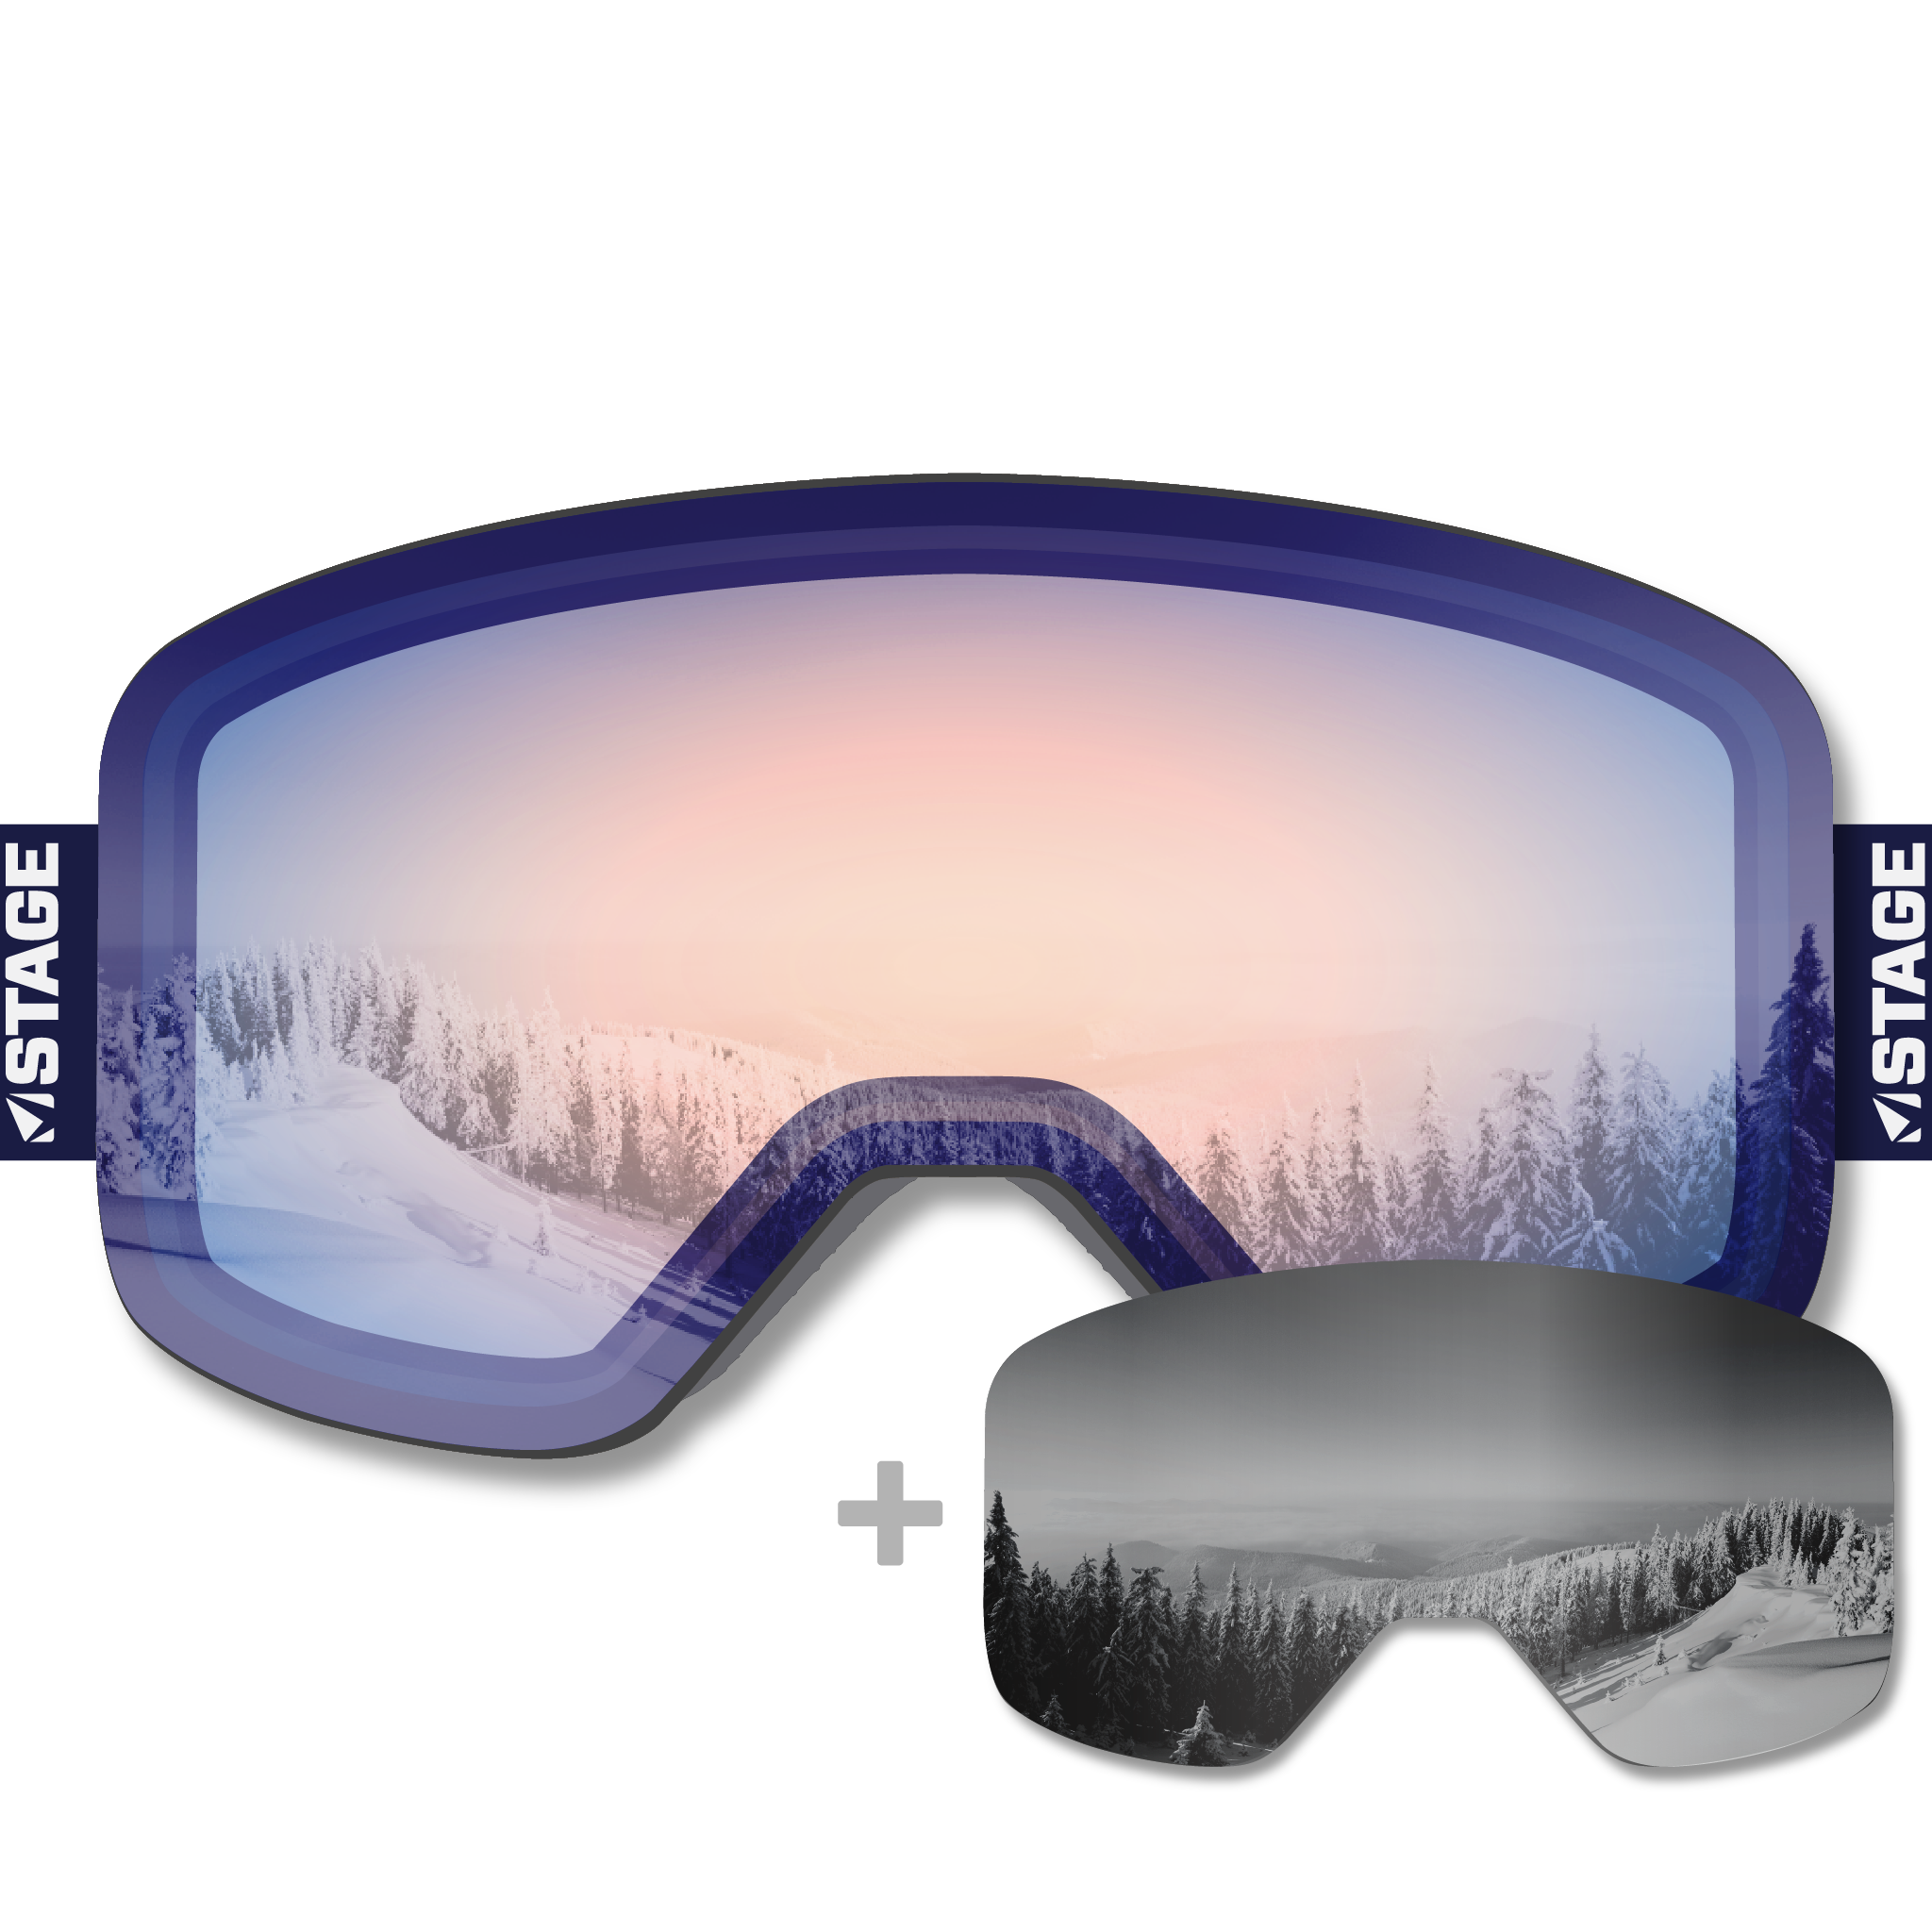 New England Disabled Sports Propnetic - Magnetic Ski Goggle + Bonus Lens